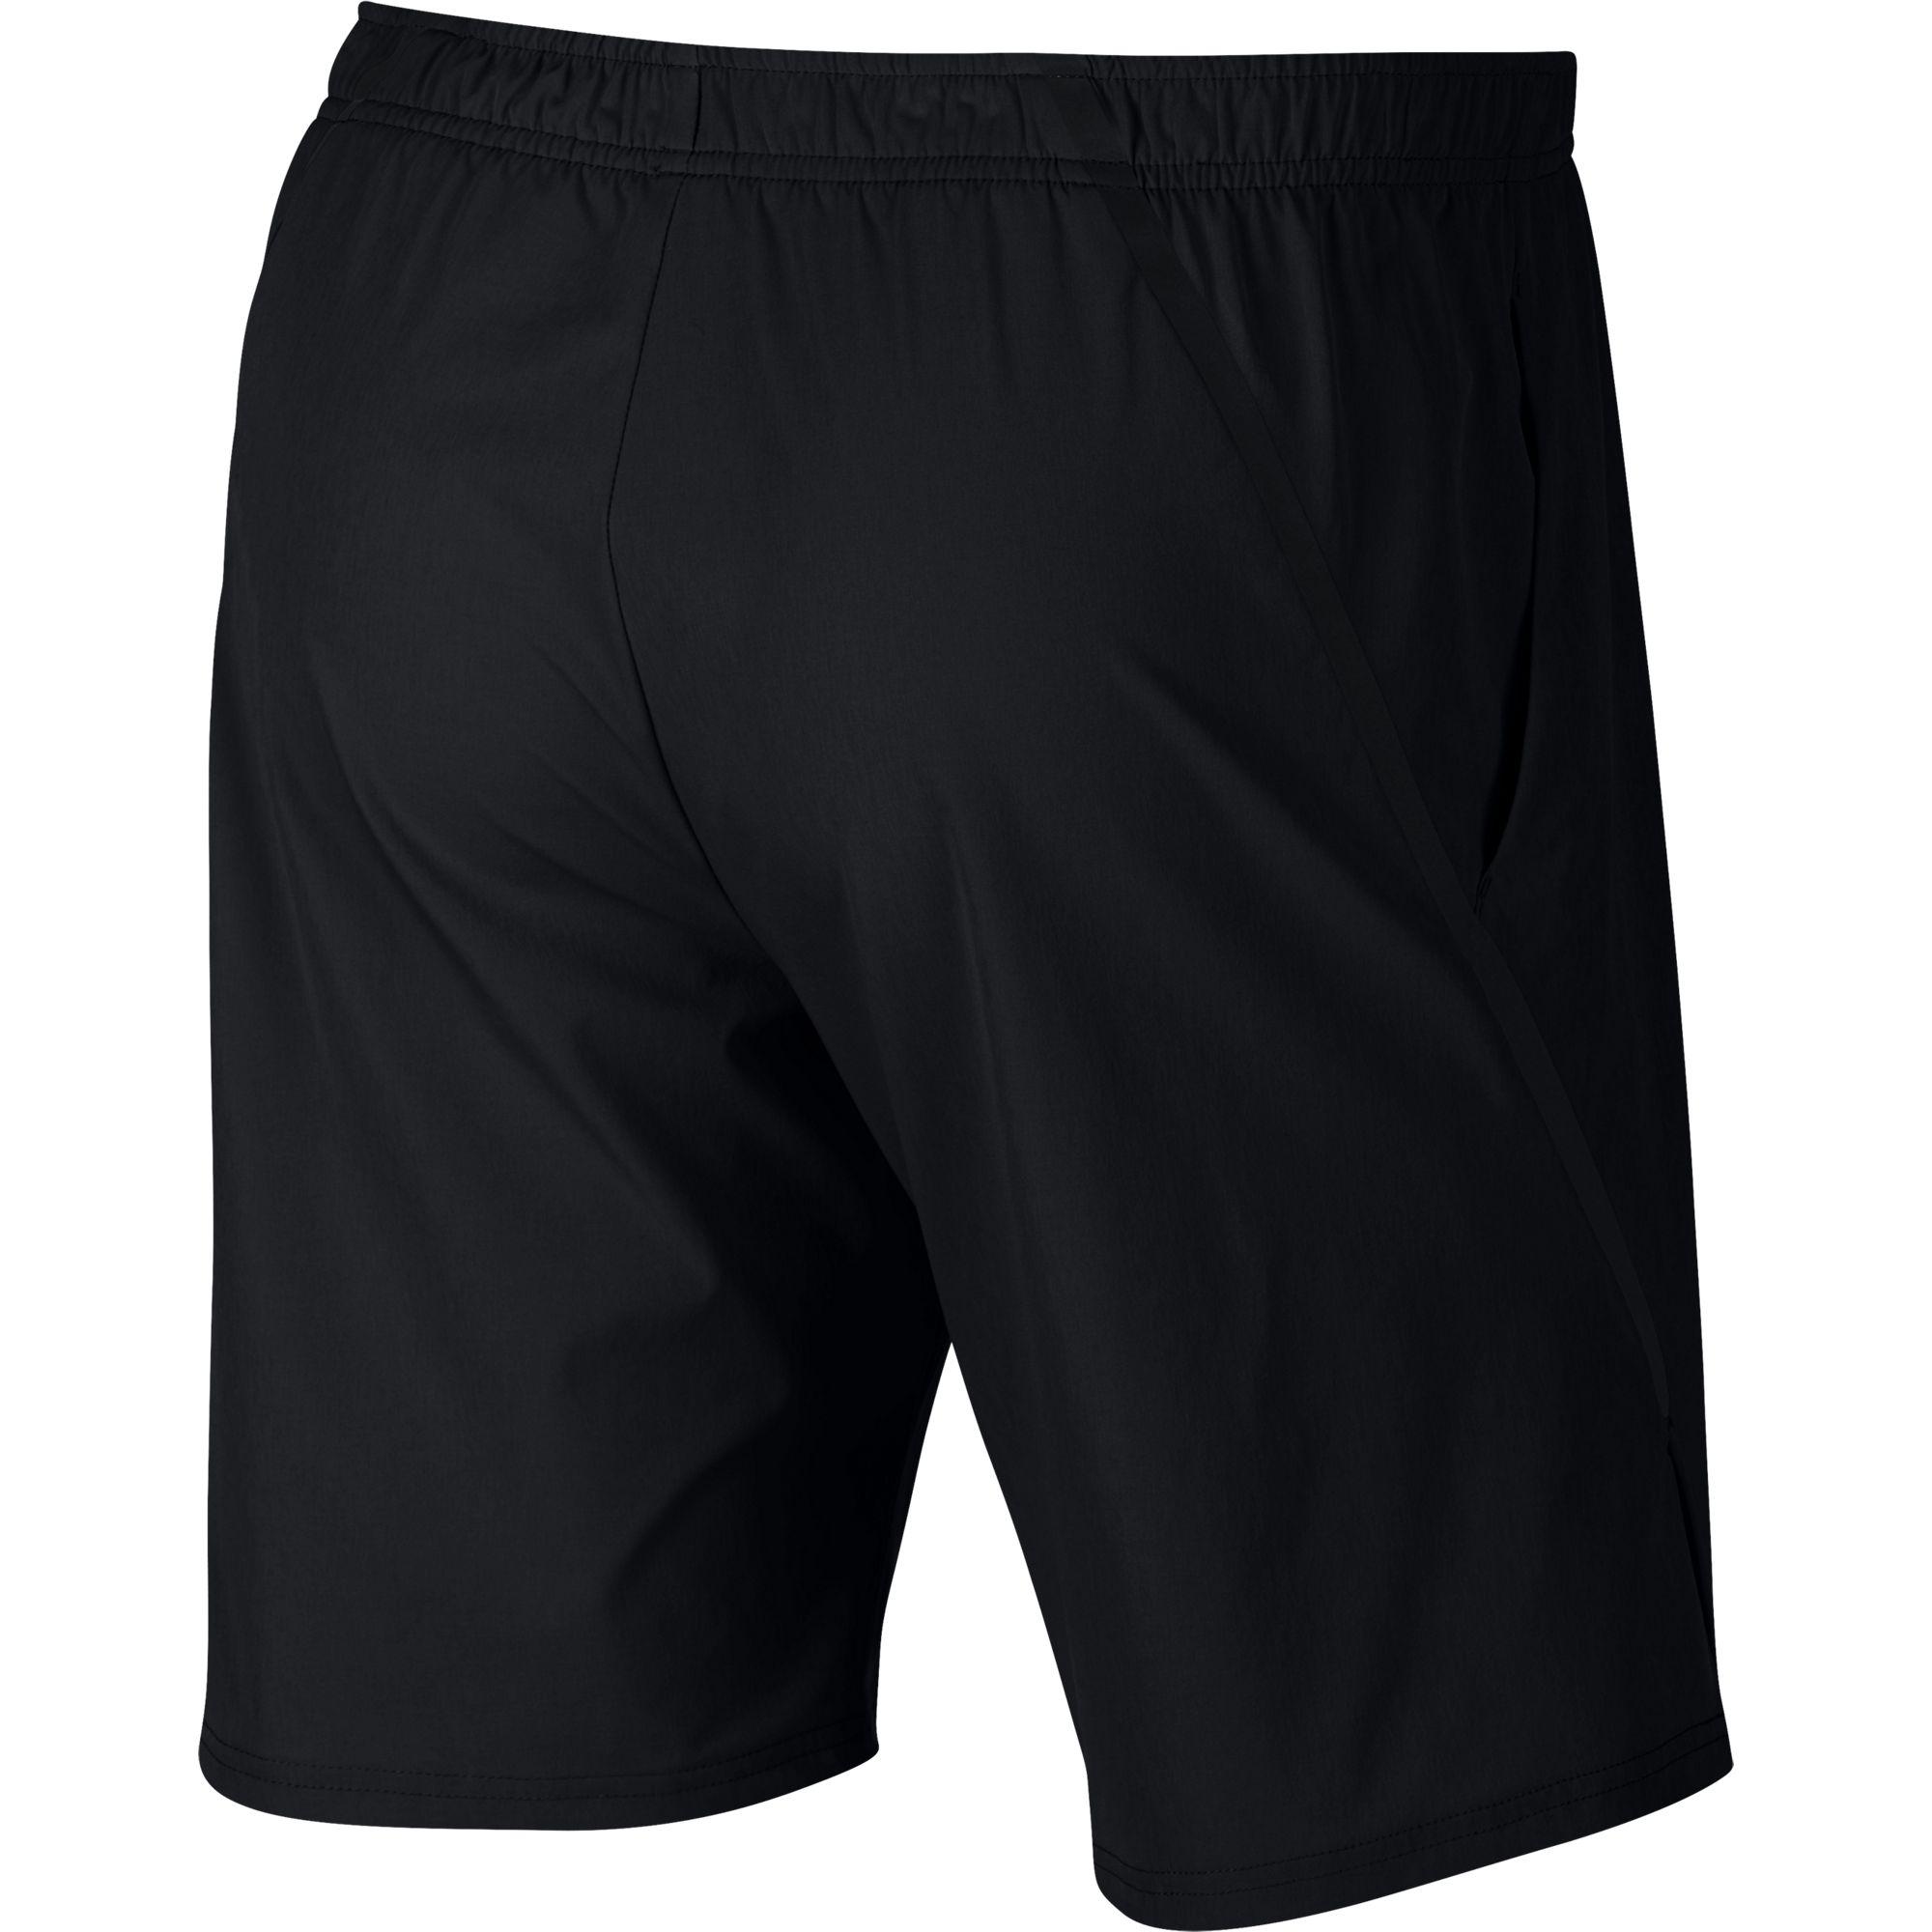 Nike Mens Flex Ace 9 Inch Shorts - Black/White - Tennisnuts.com